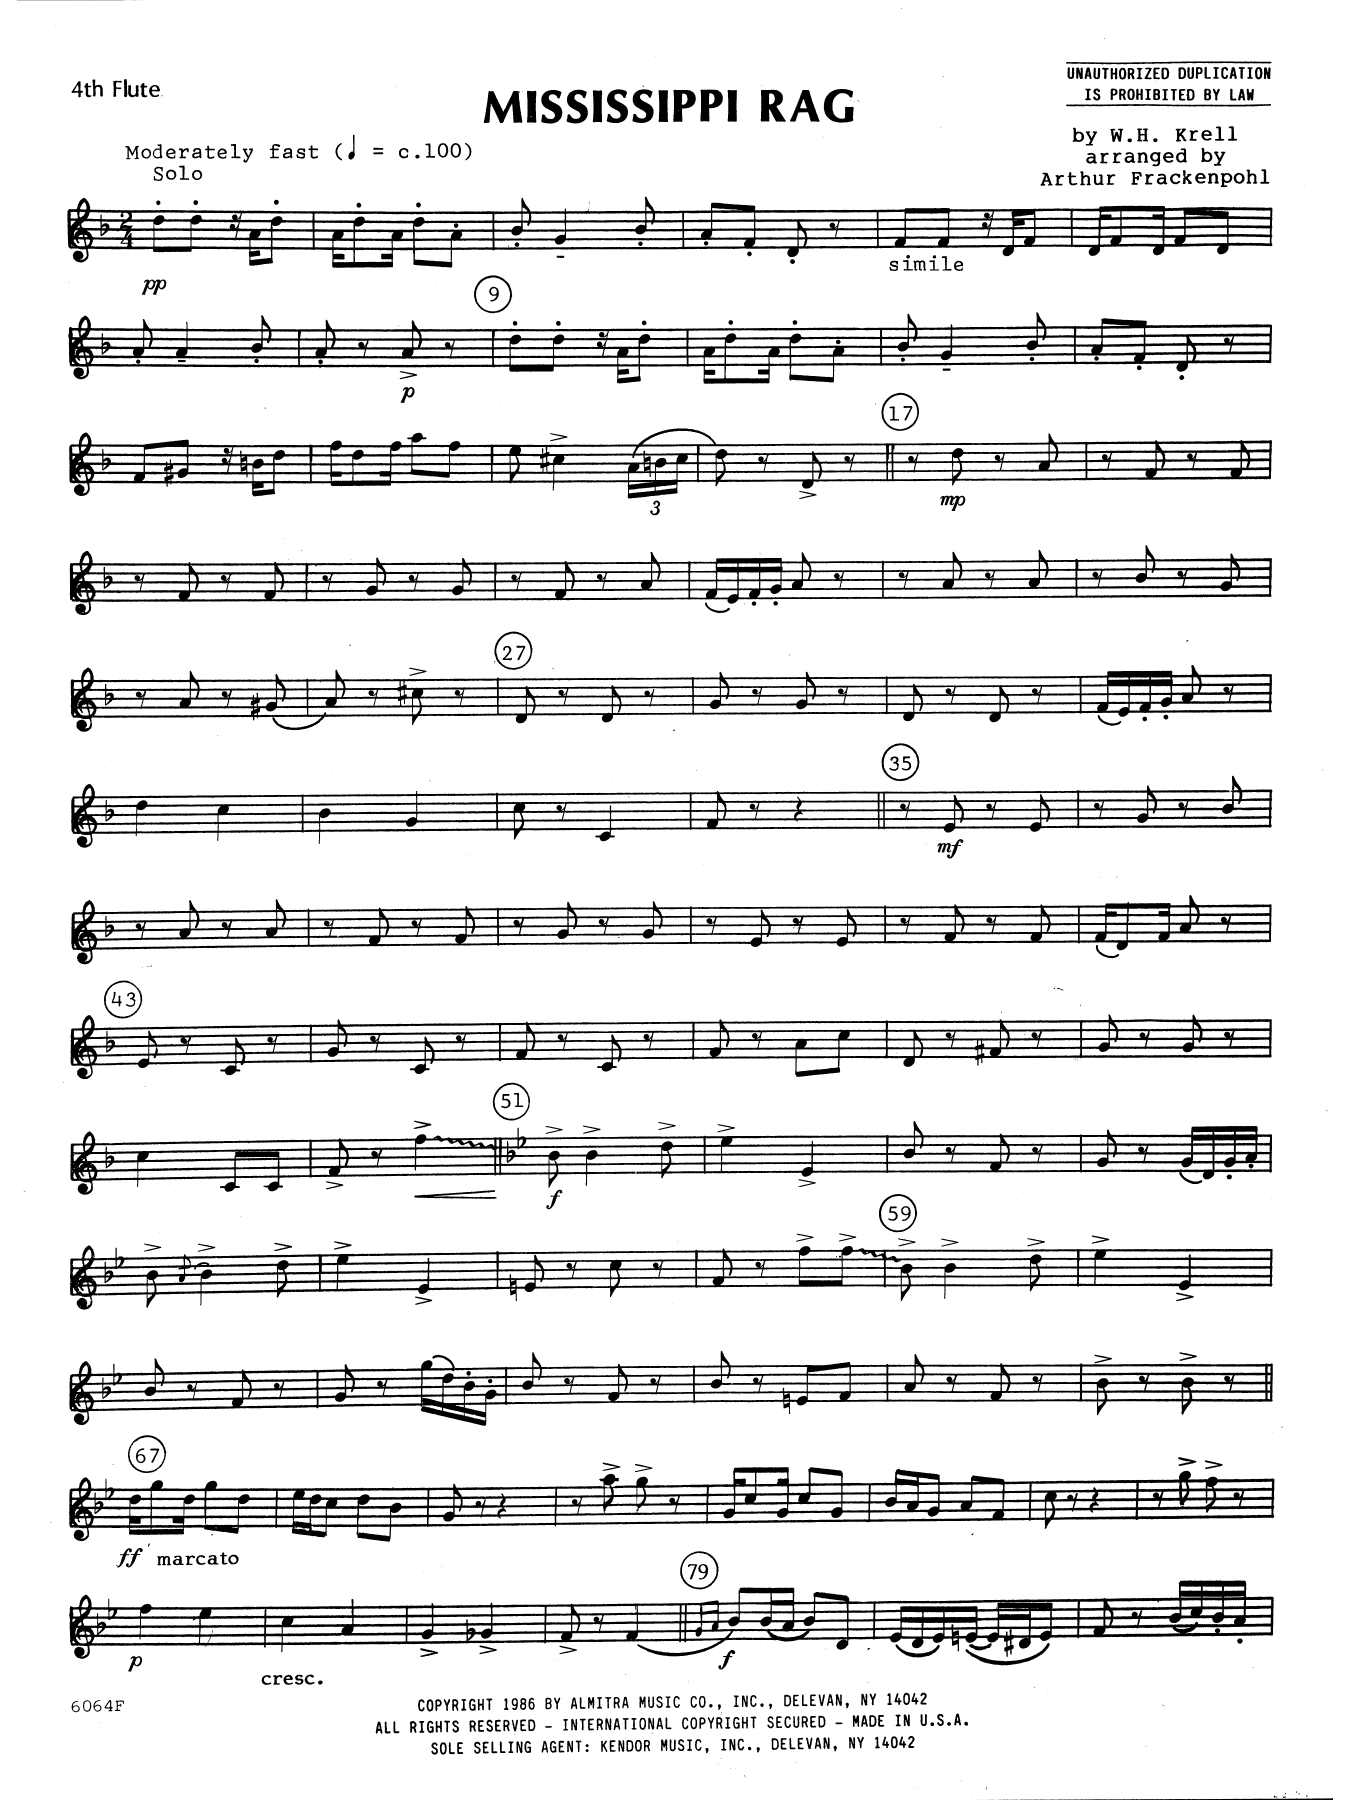 Download Arthur Frankenpohl Mississippi Rag - 4th Flute Sheet Music